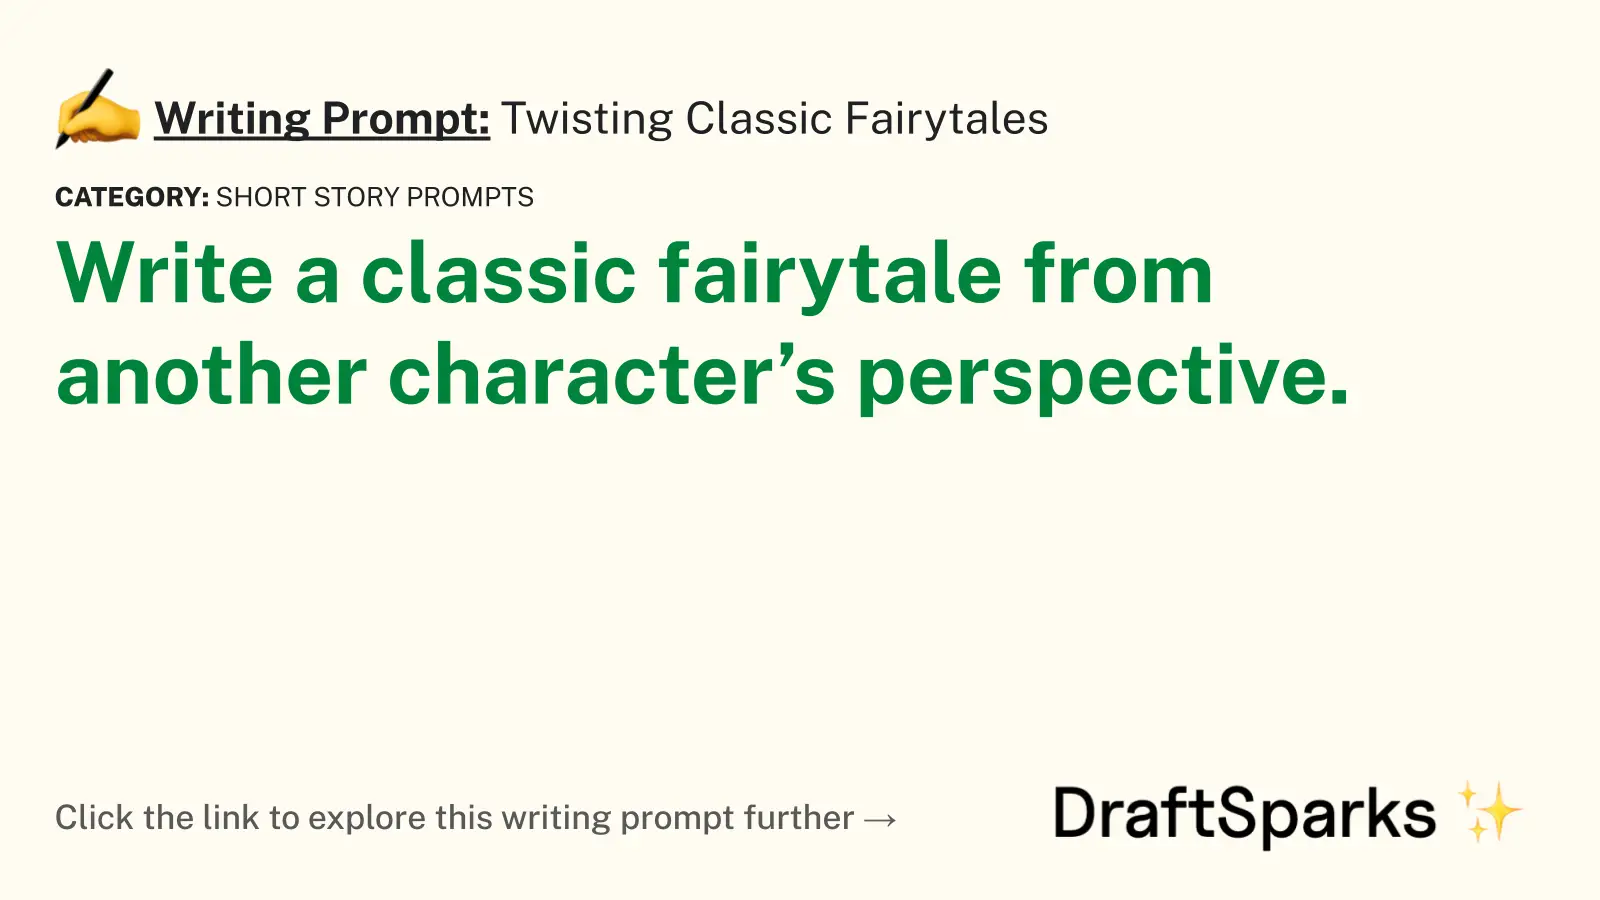 Twisting Classic Fairytales